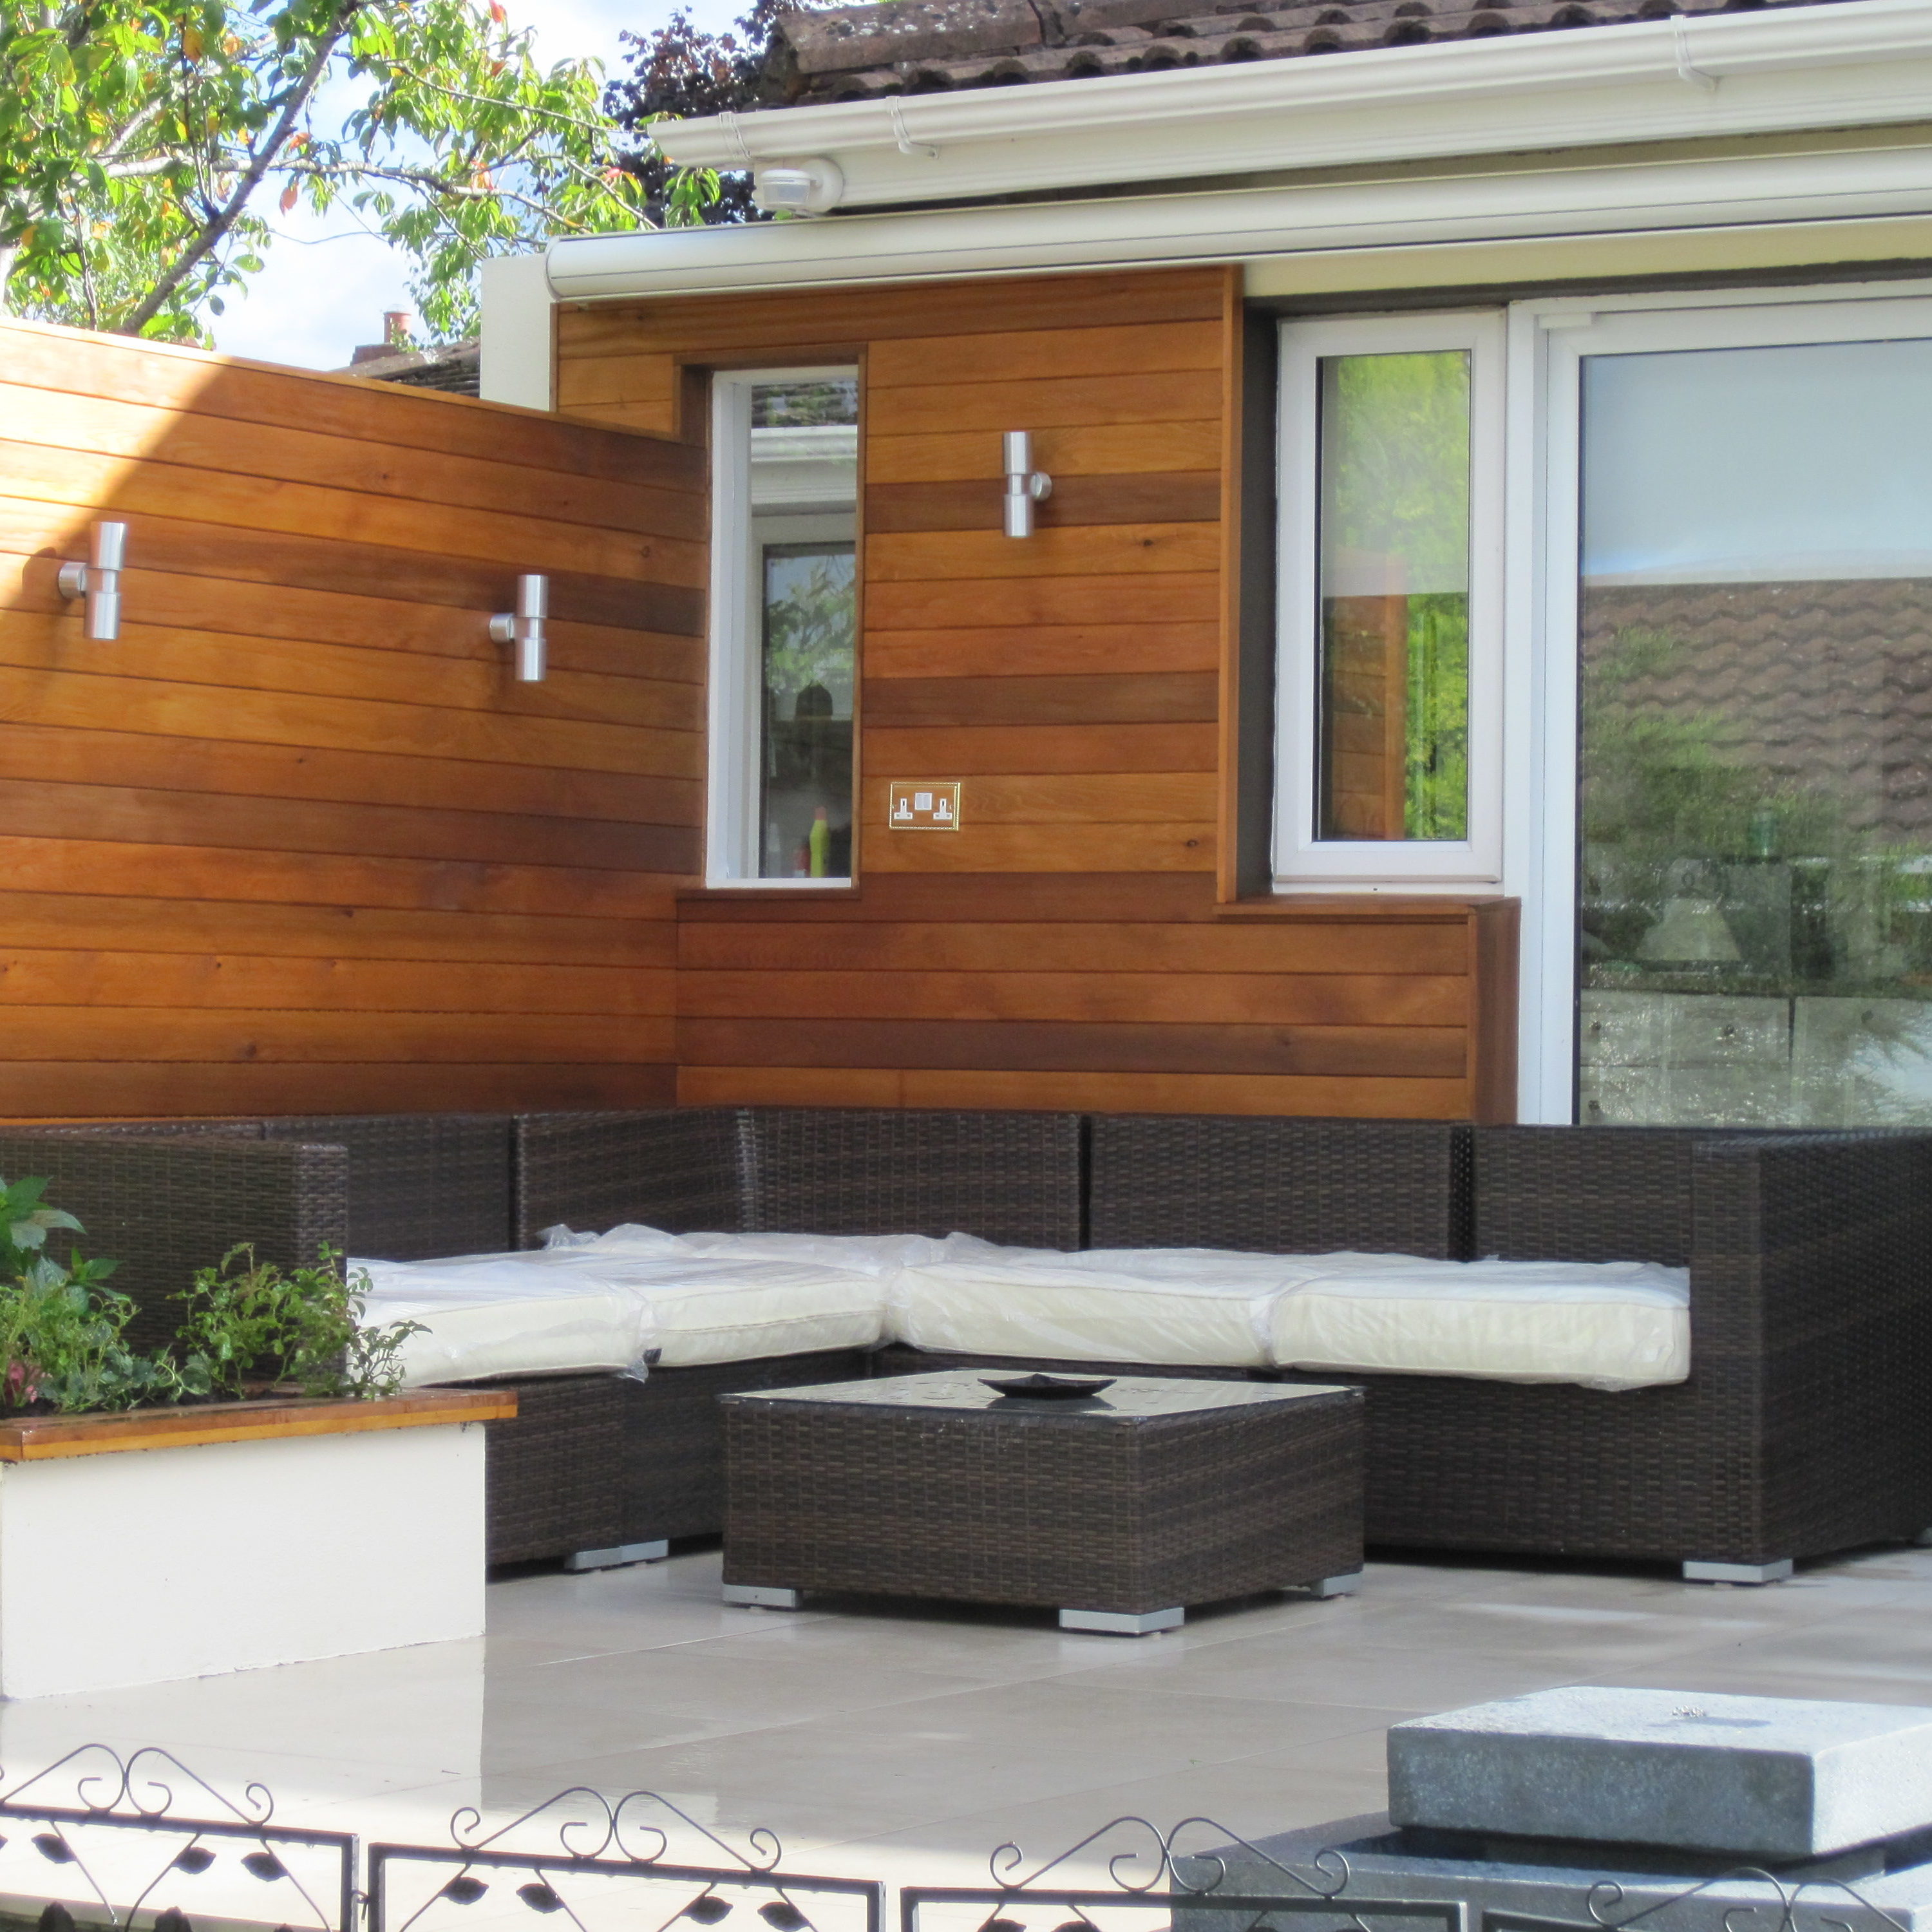 Dynamic Home Improvements Ltd specialise in installing garden patios in Somerset